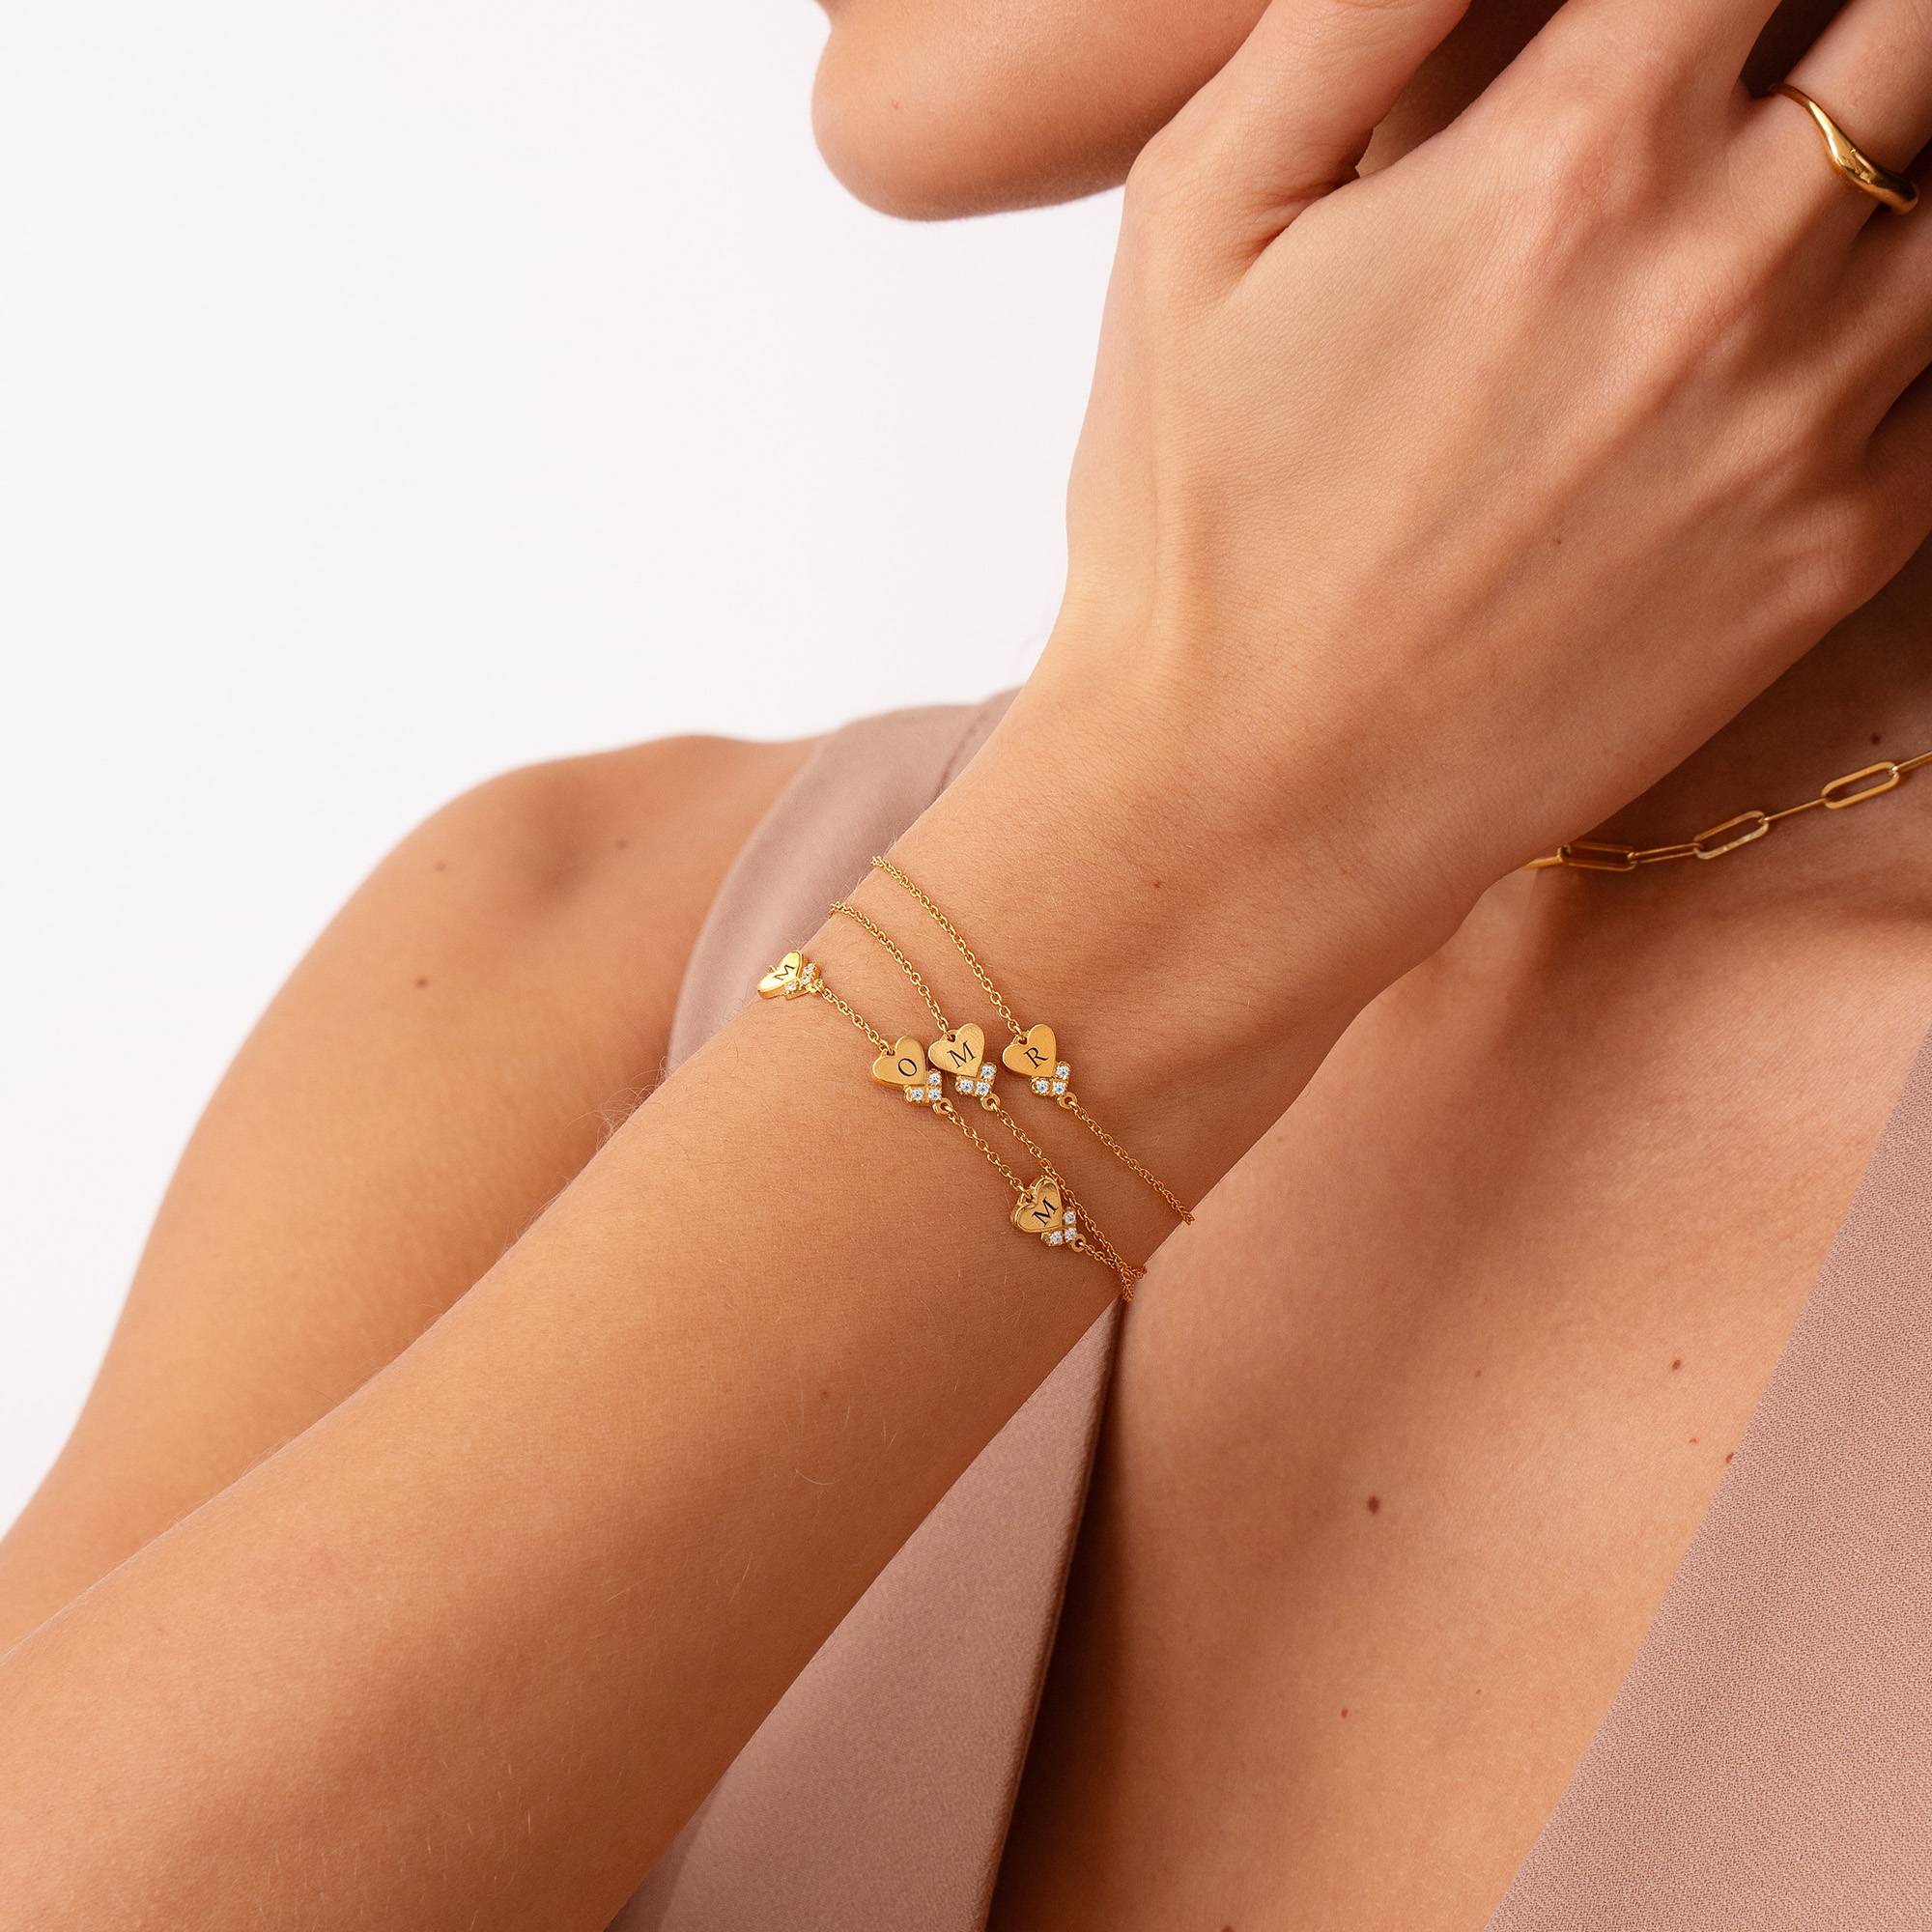 Dakota Heart Initial Bracelet with Diamonds in 18K Gold Vermeil-2 product photo